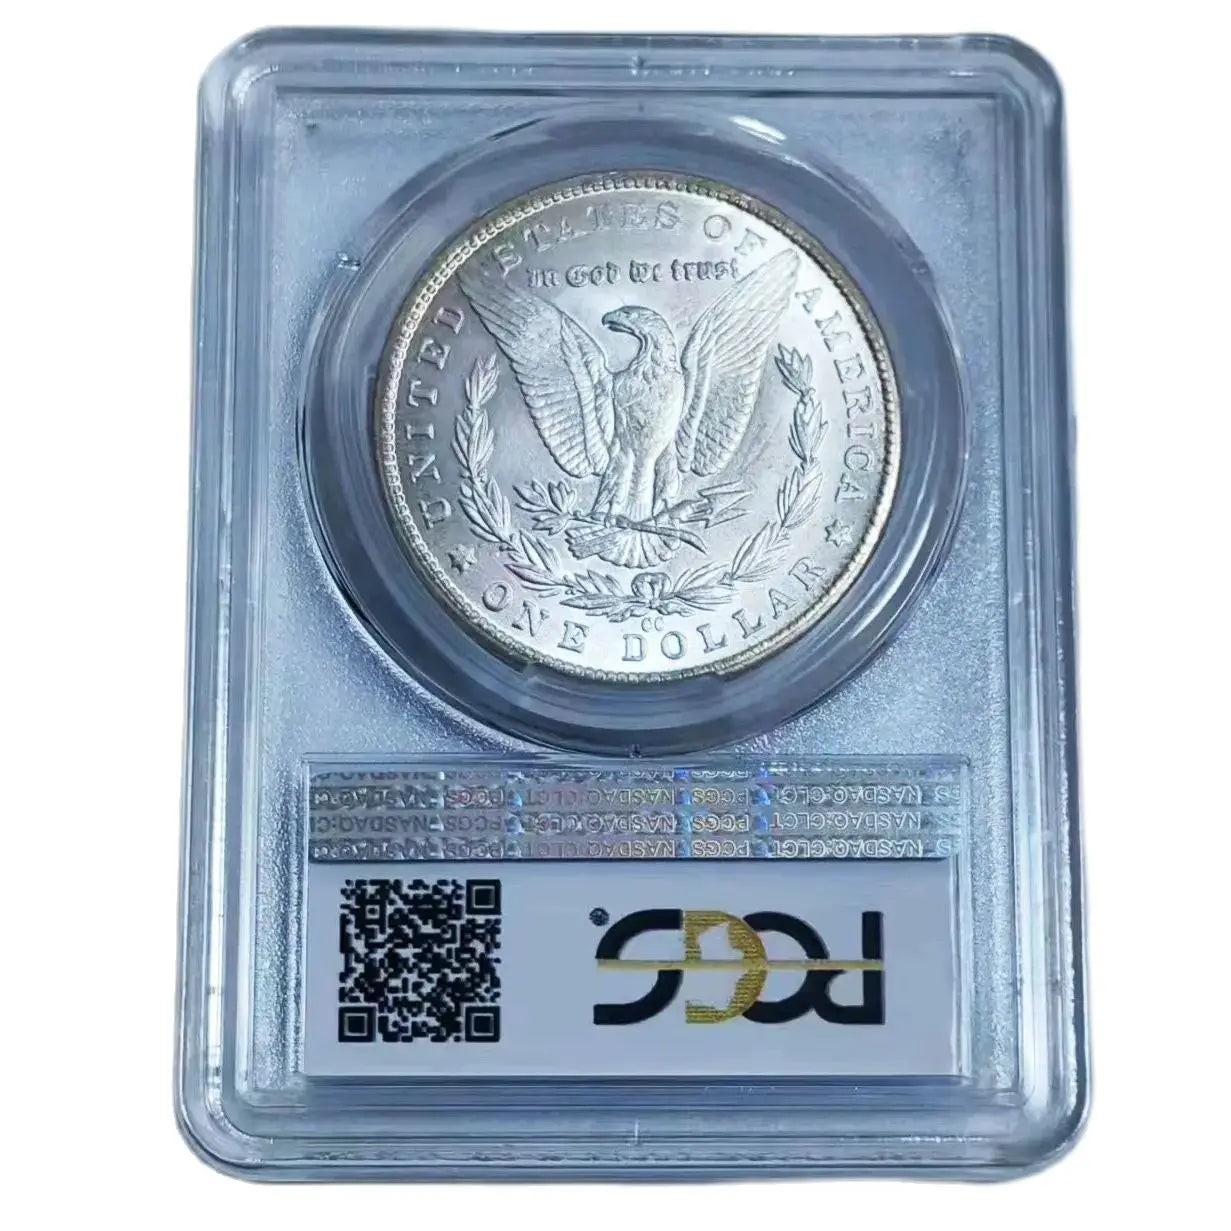 Rare Mint Condition 1891-CC Morgan Dollar - A True Historical Treasure"